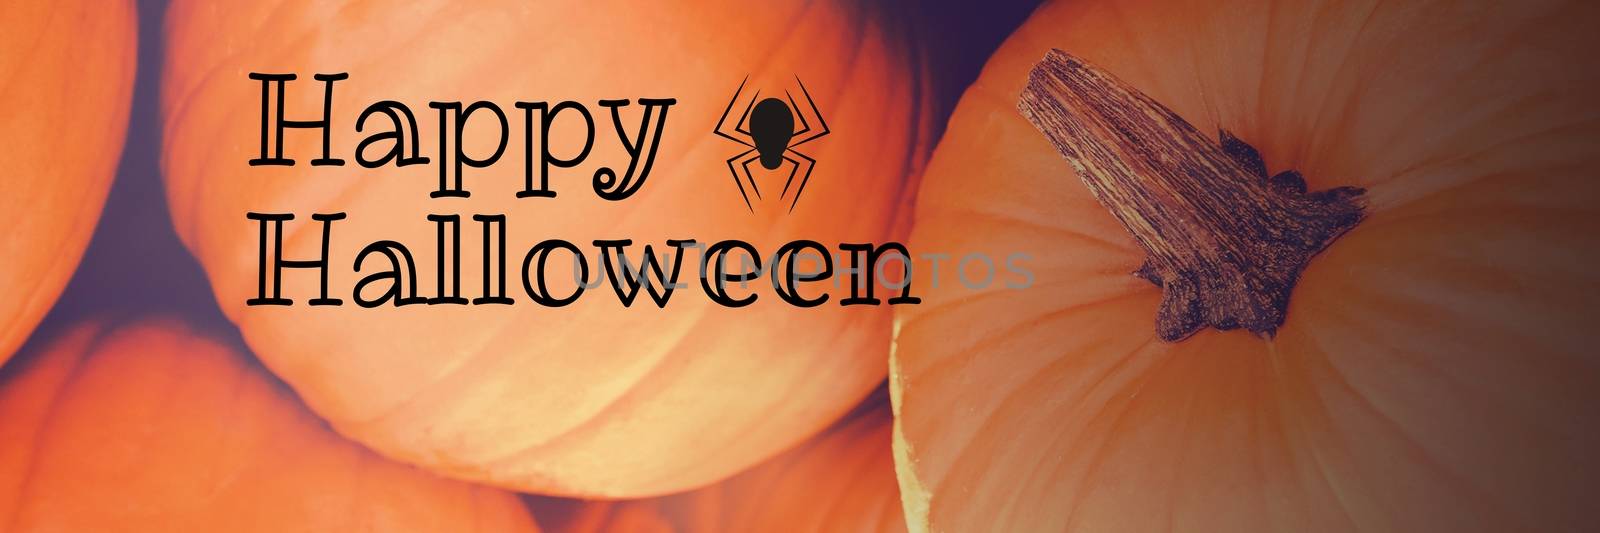 Happy Halloween text with pumpkins by Wavebreakmedia